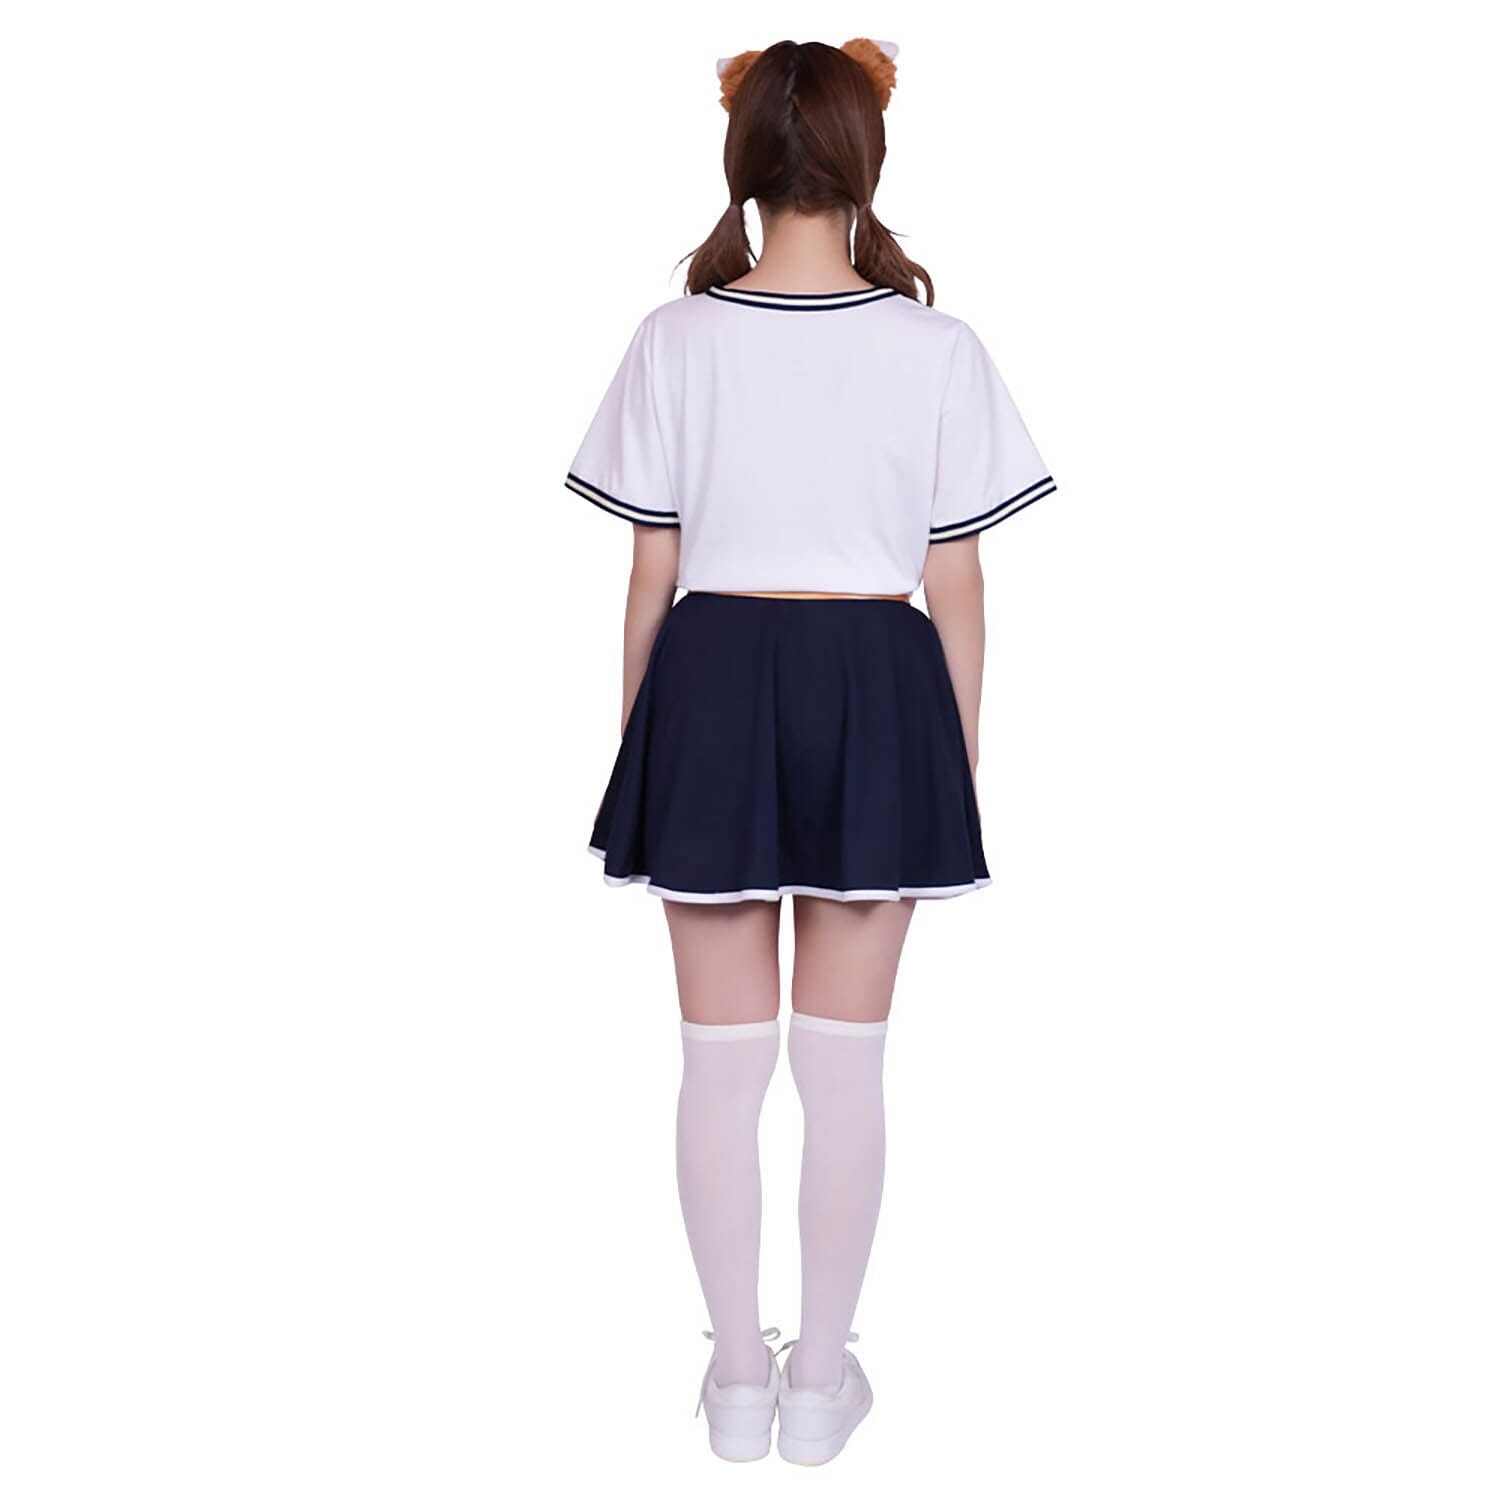 A&T COLLECTION AT Girls 啦啦隊美少女 角色扮演套裝 KA0267WH 購買